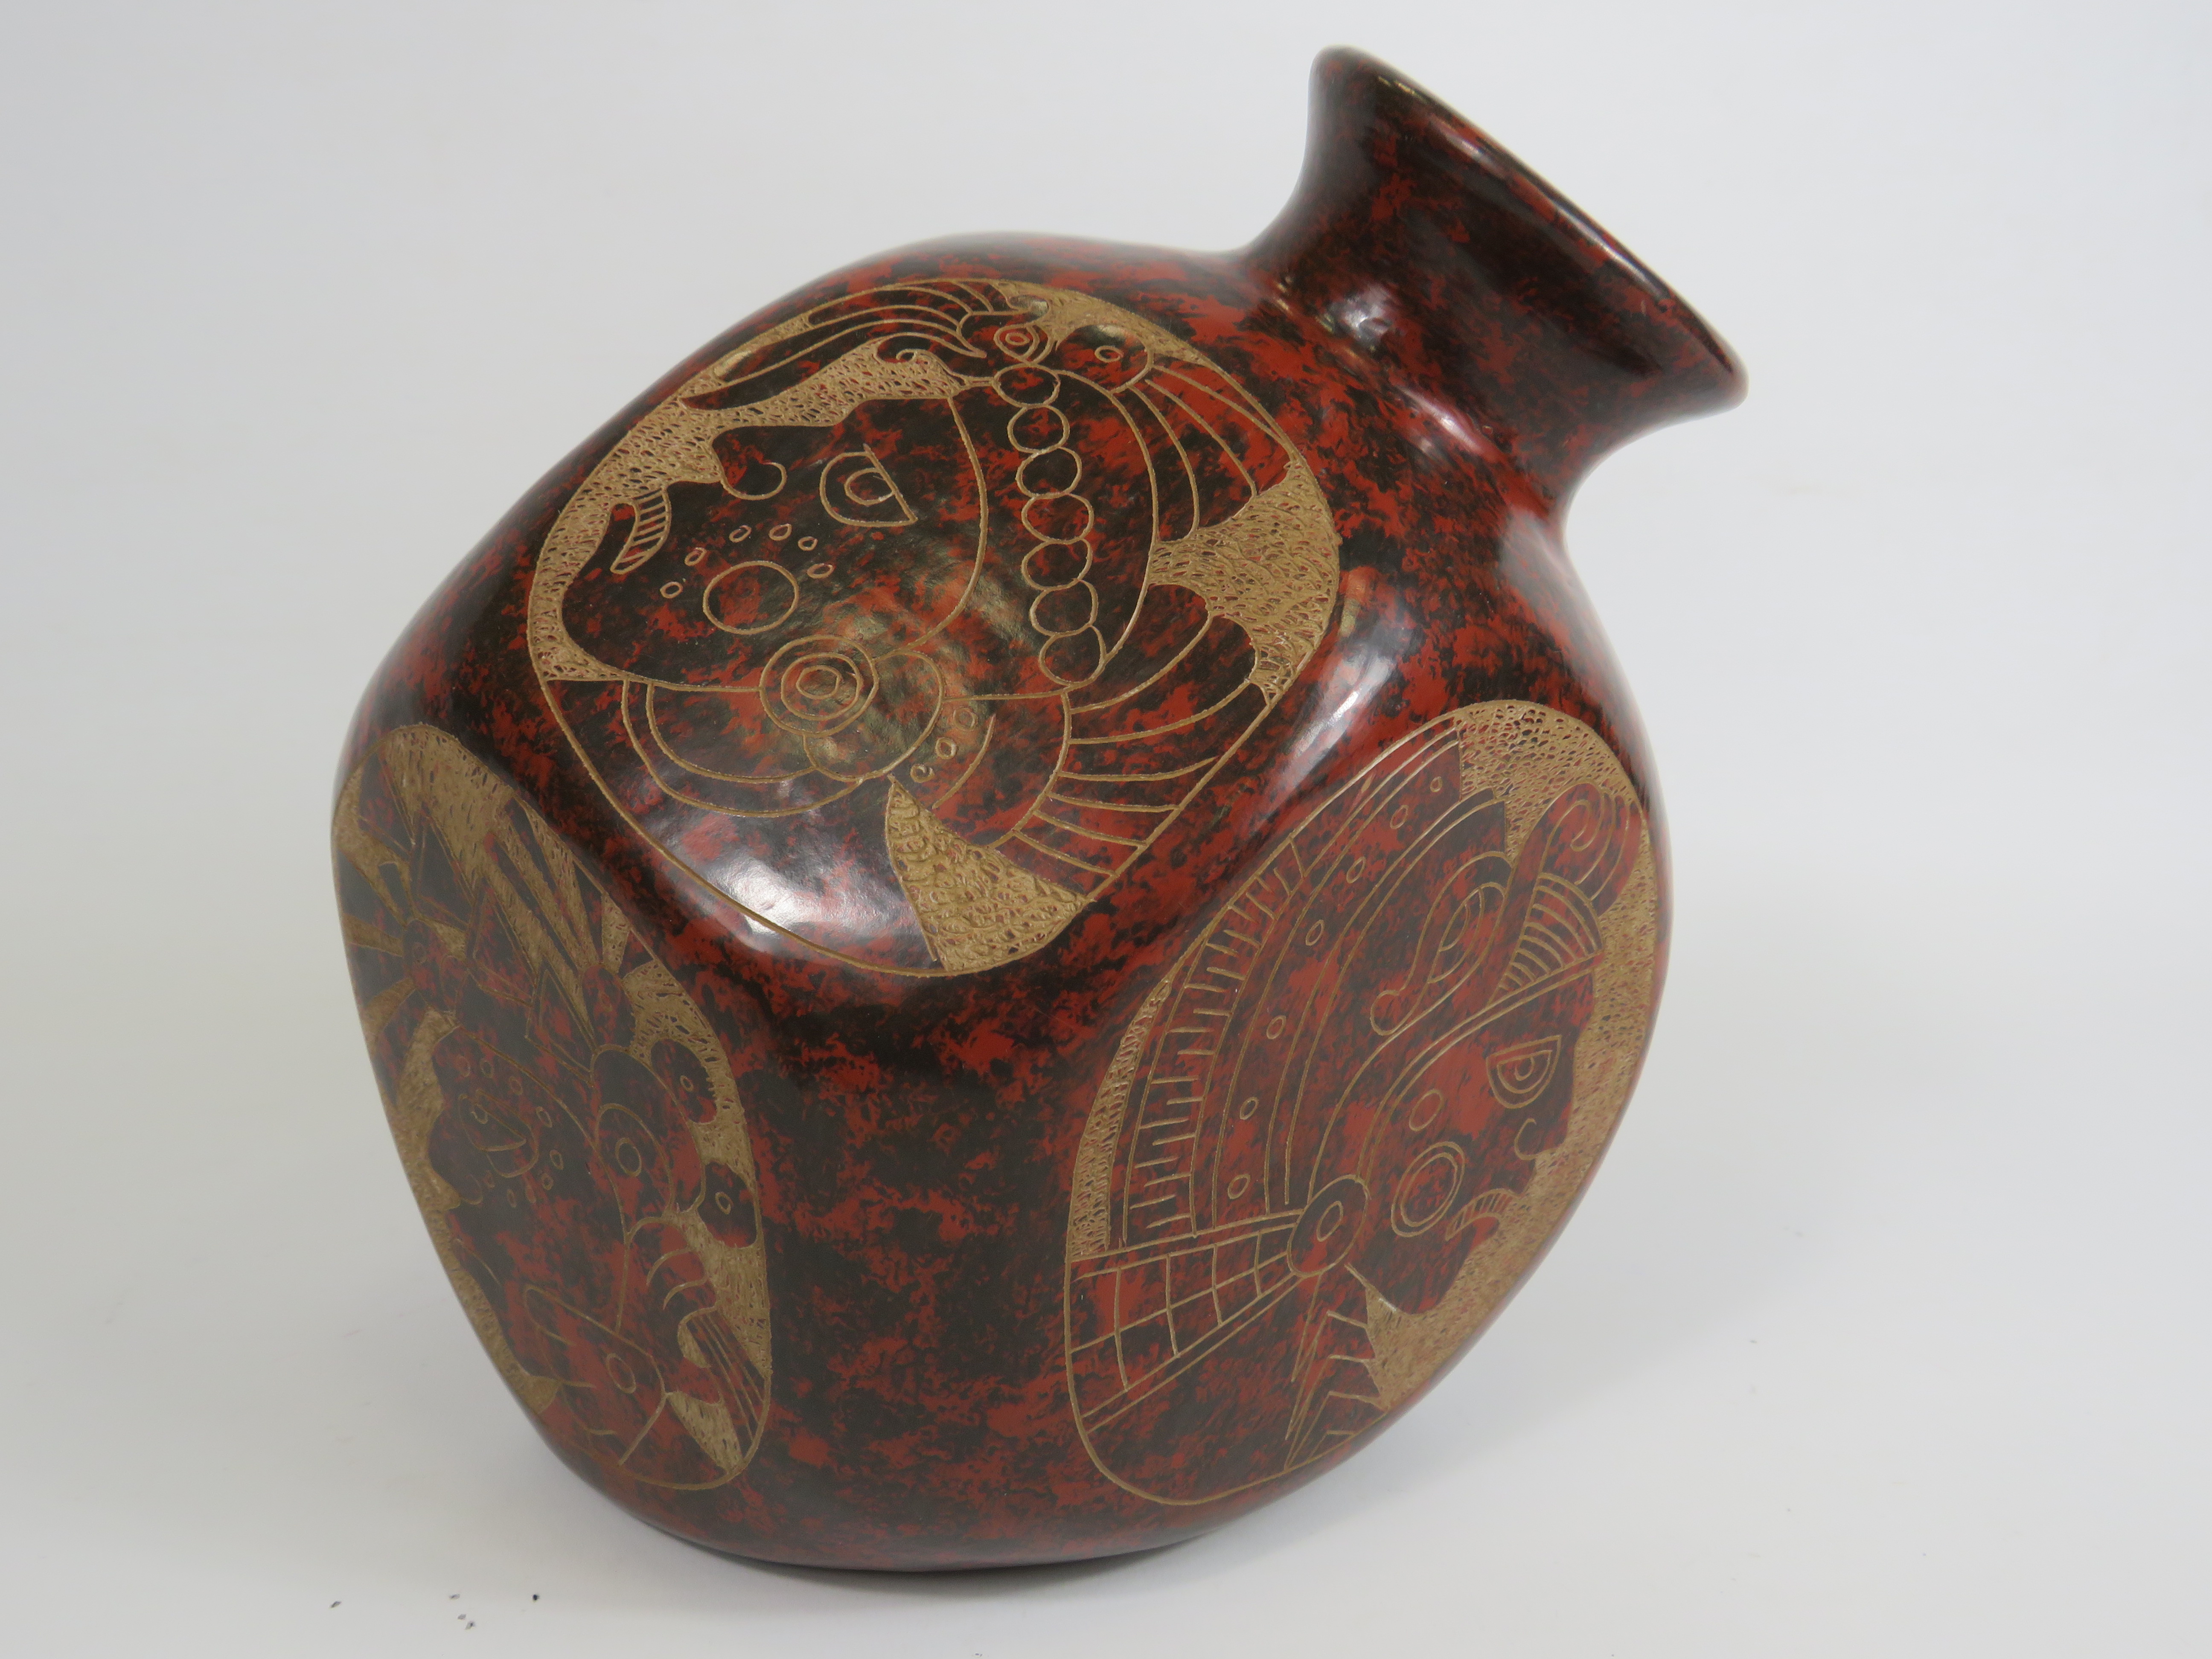 Nicaragua etched ceramic decorative multifaceted vase 24cm tall.